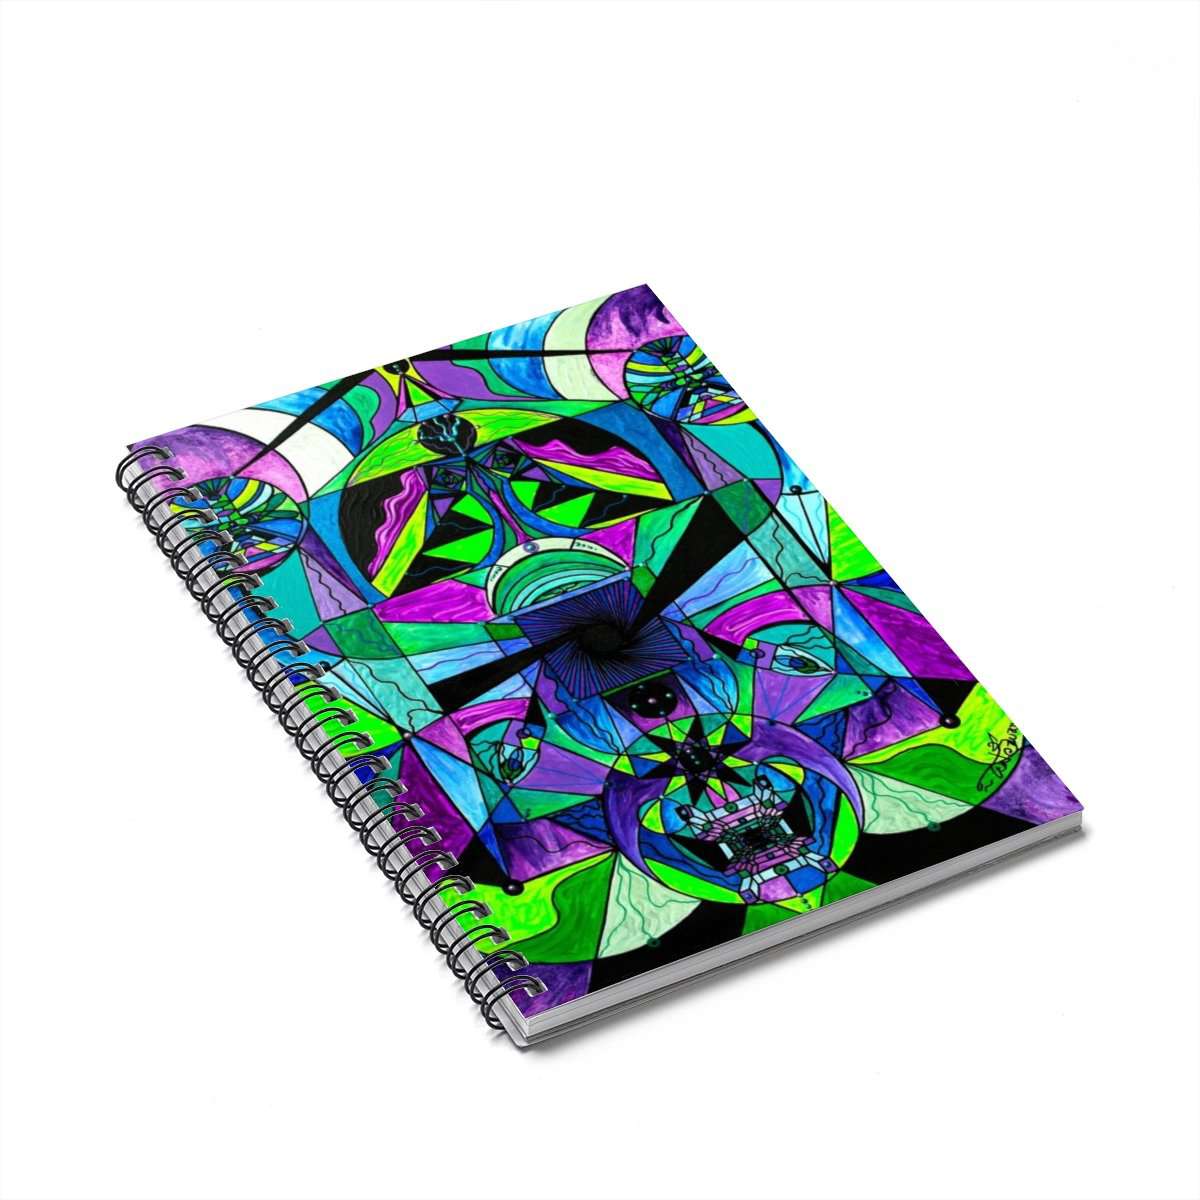 Arcturian Astral Travel Grid - Spiral Notebook